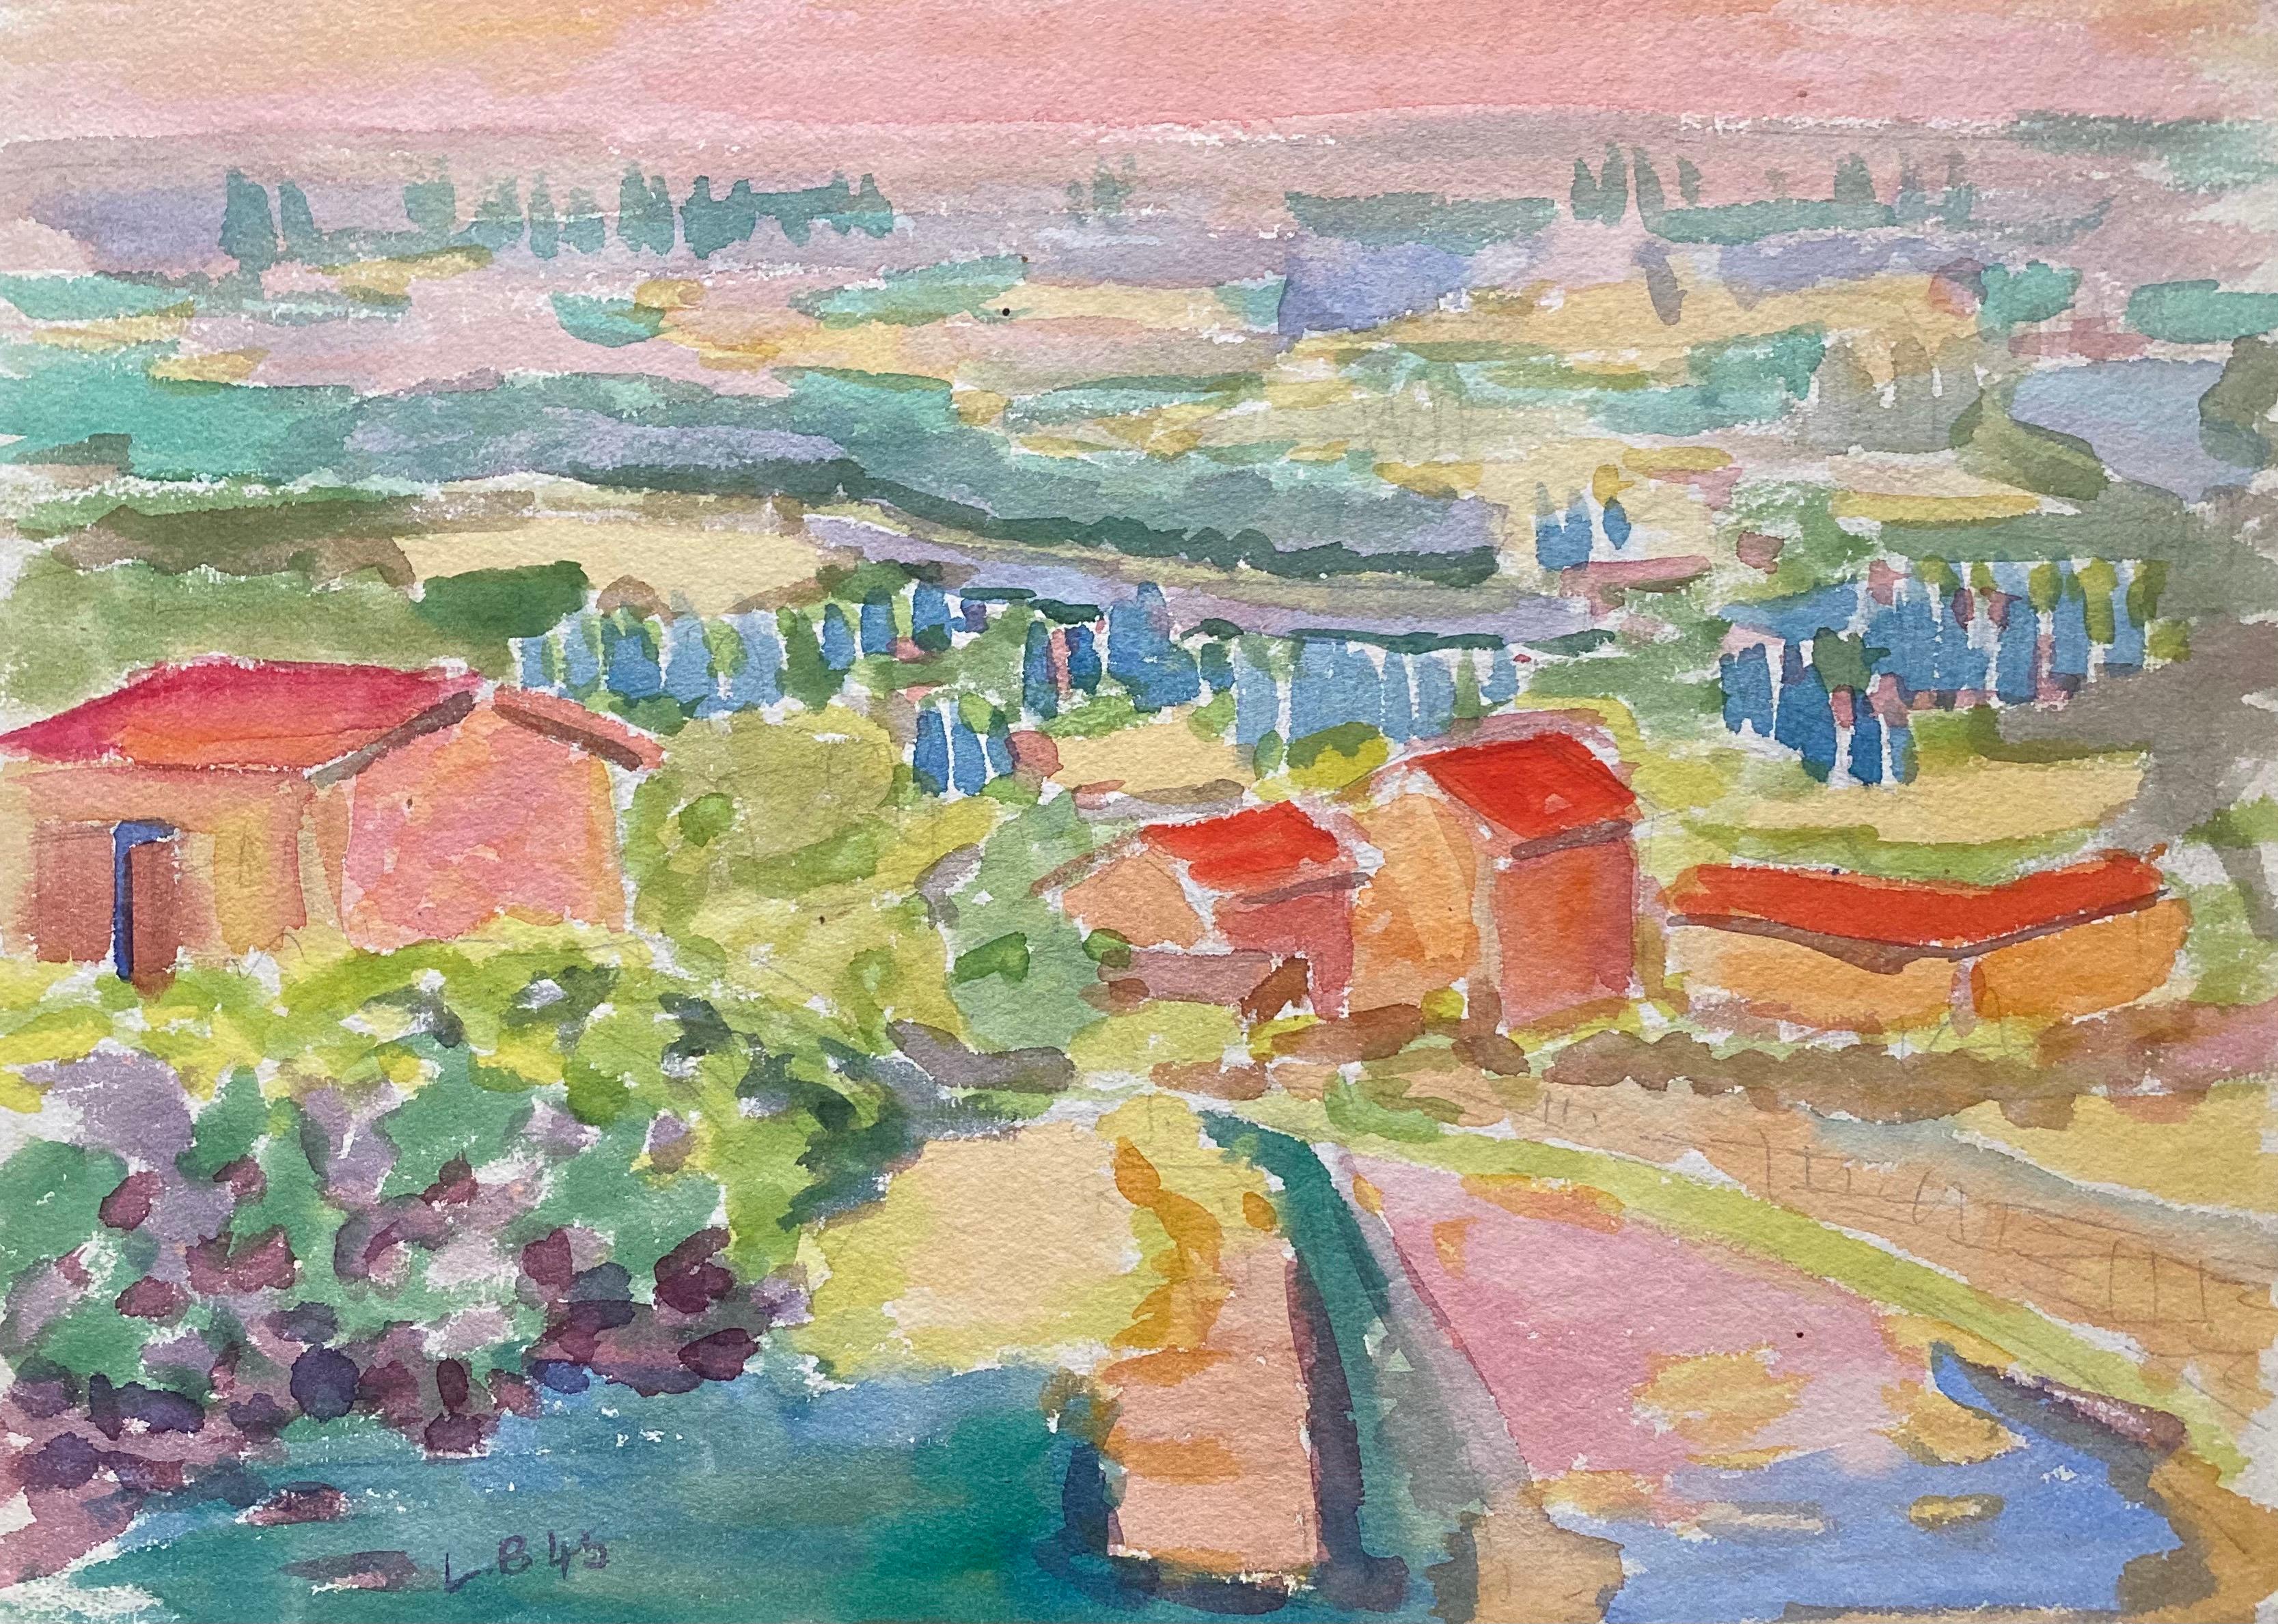 Louis Bellon Landscape Painting - 1940's Provence French Town Painting Landscape  - Post Impressionist artist